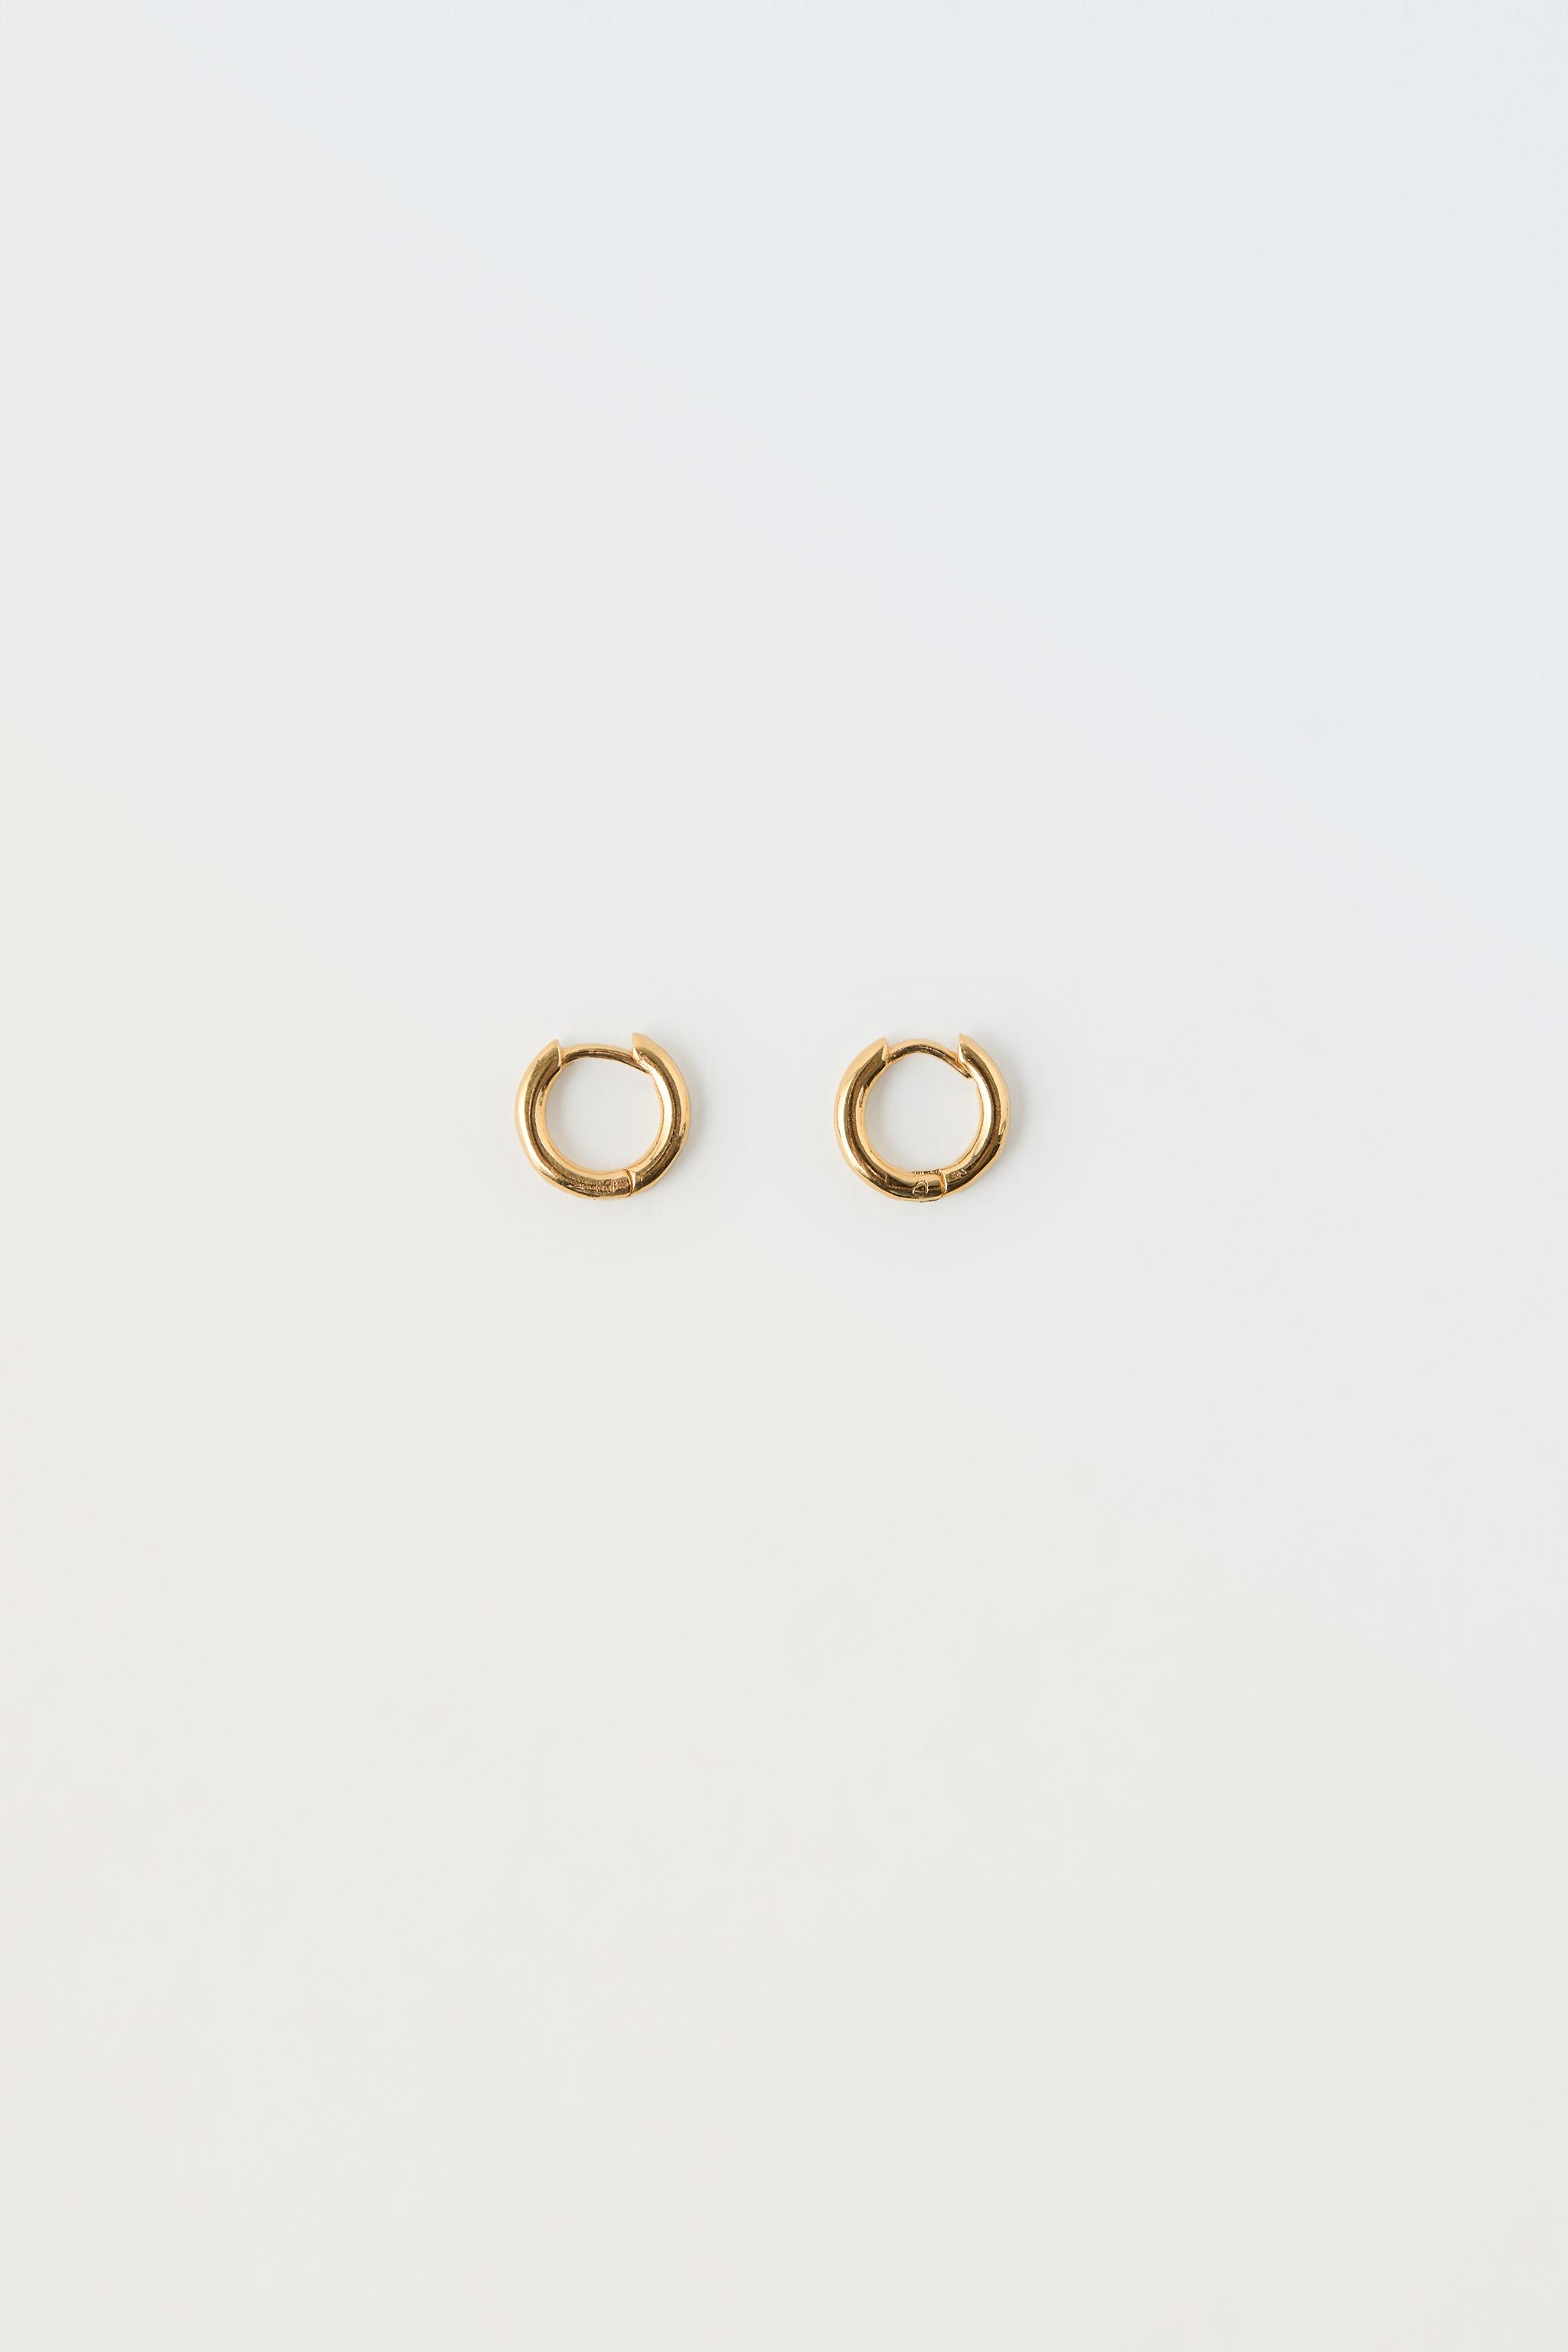 24K 鍍金環形耳環- 金黃色| ZARA Taiwan, China / 中國台灣